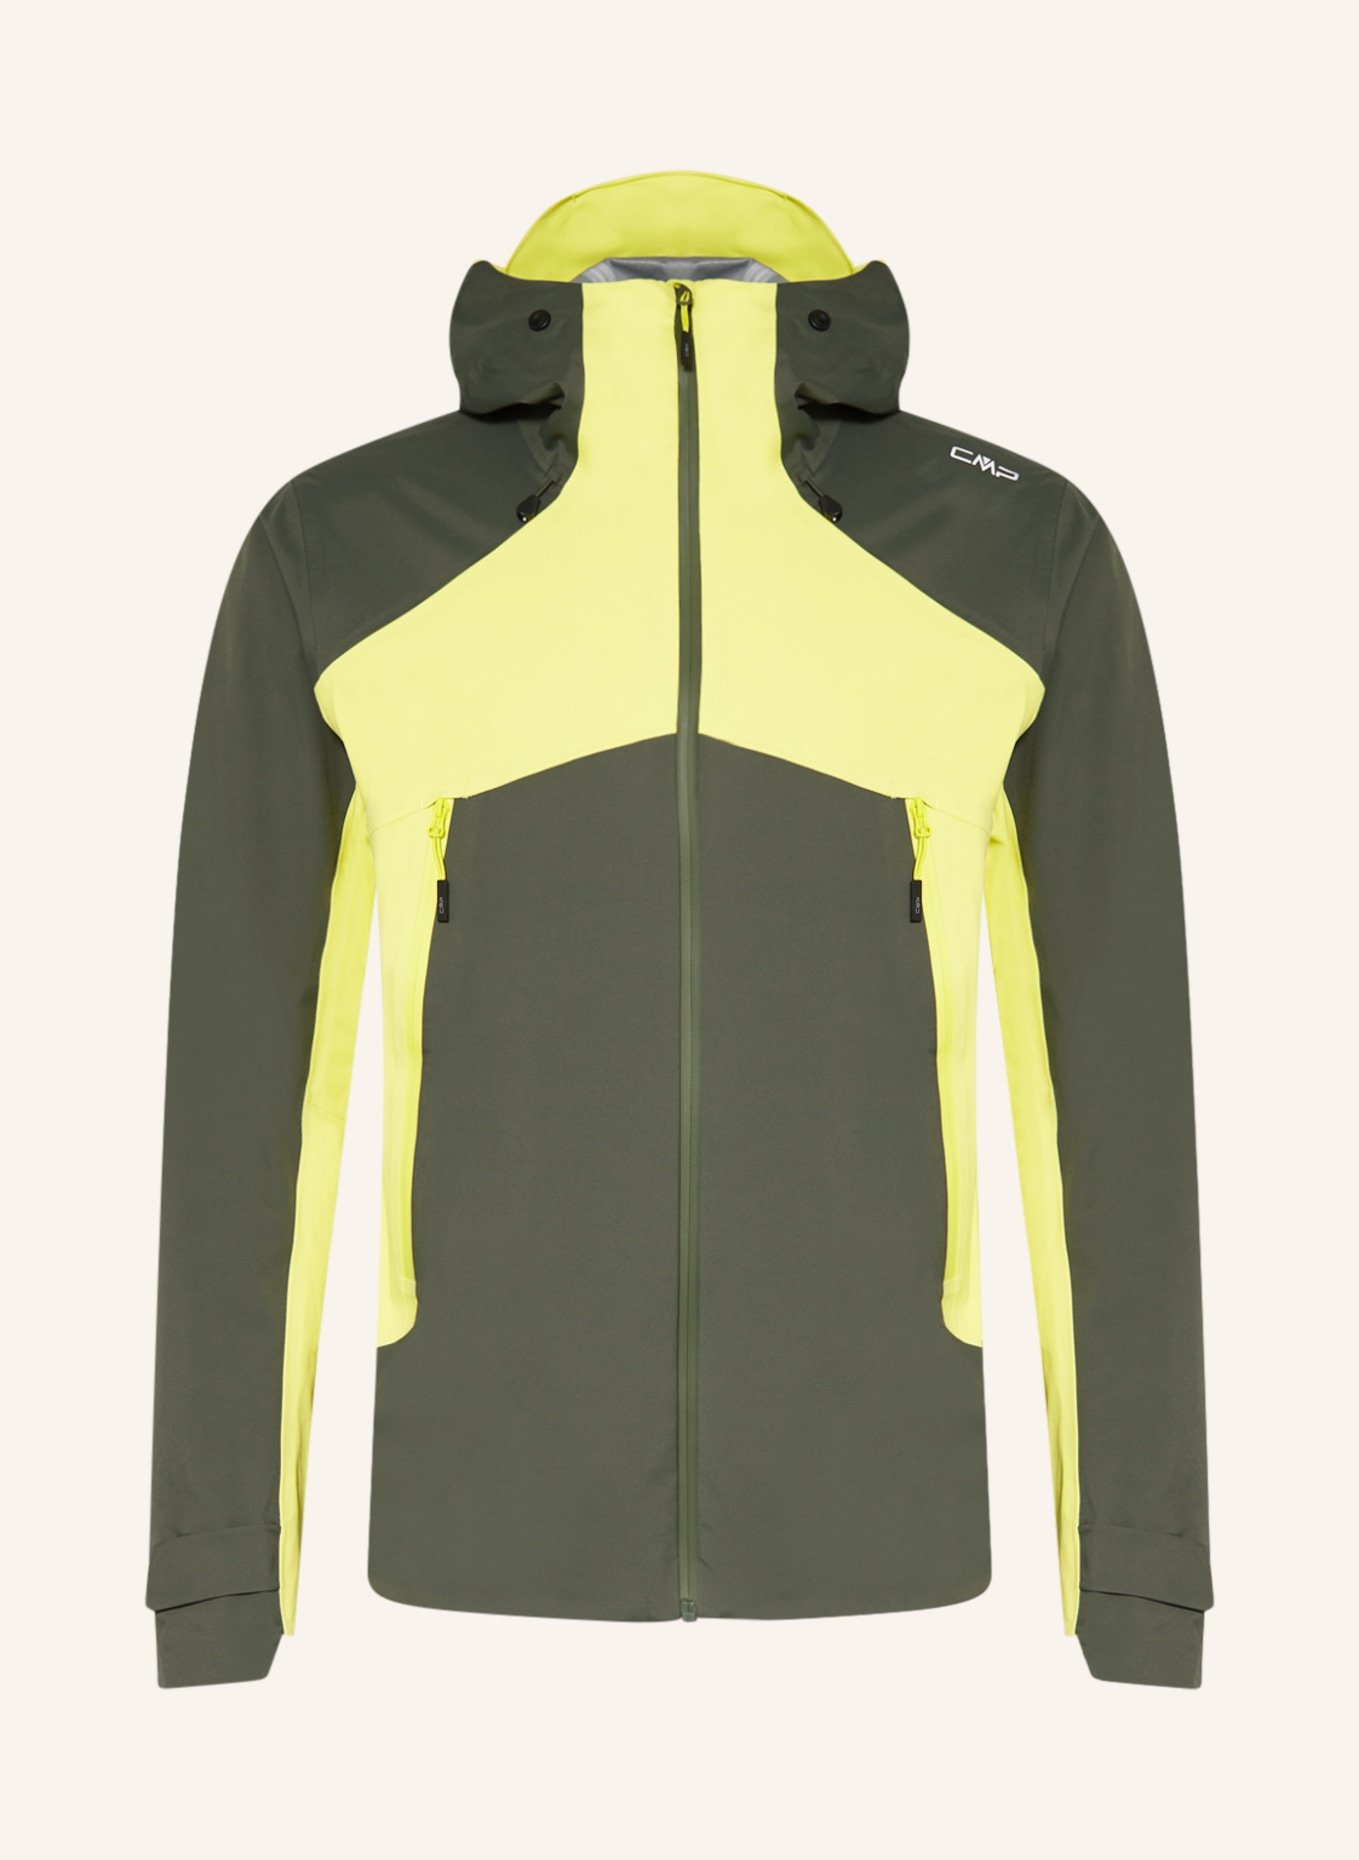 khaki/ in CMP yellow jacket Outdoor